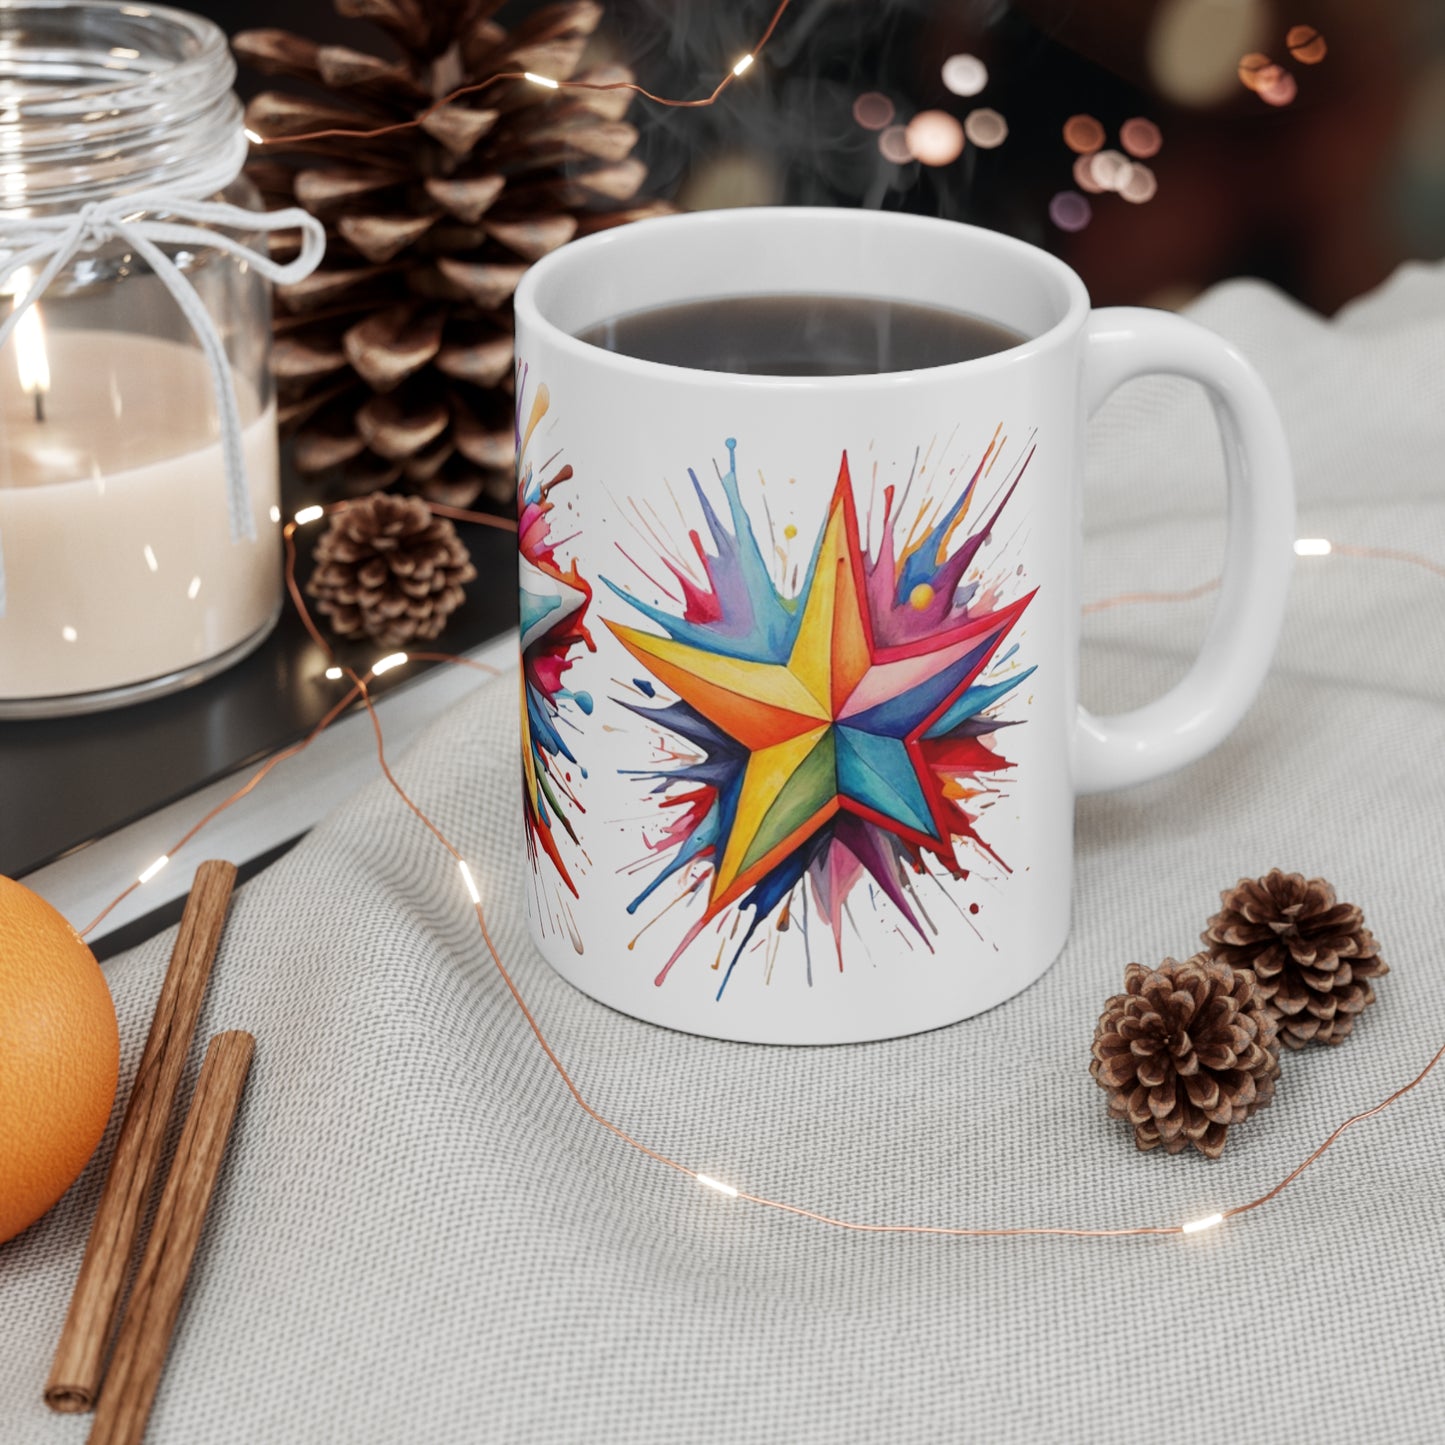 Colourful Stars Art Mug - Ceramic Coffee Mug 11oz